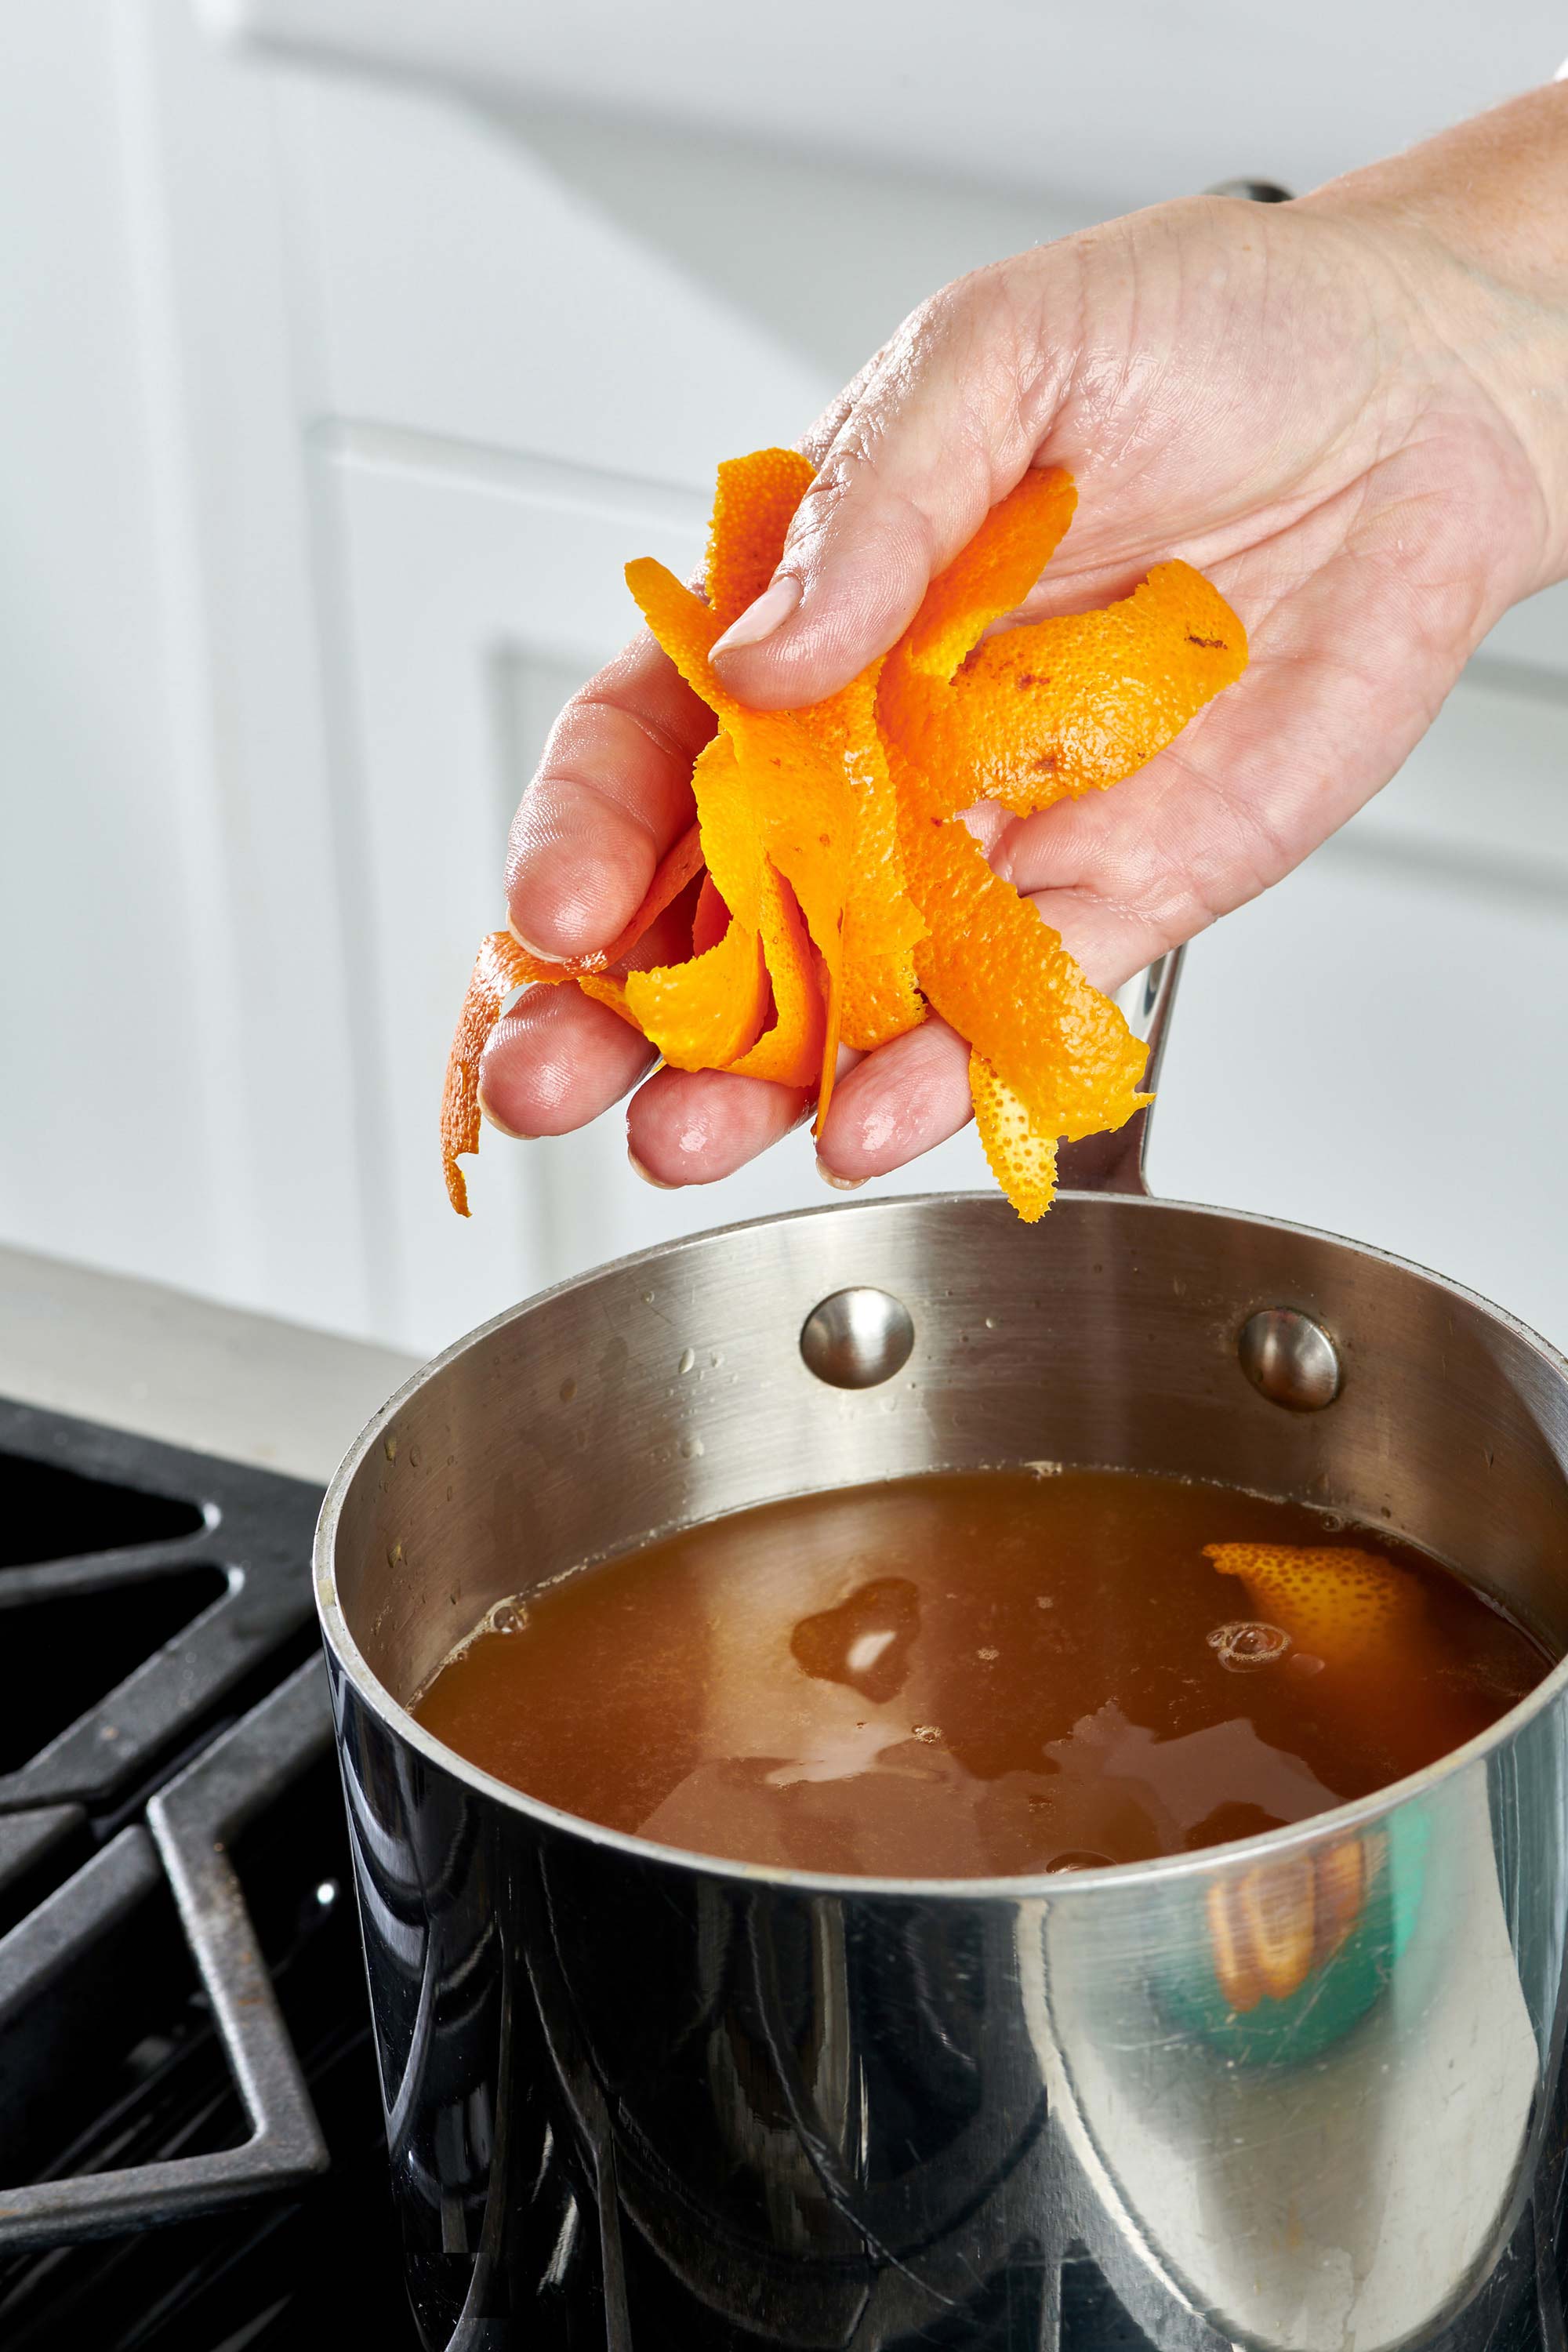 Woman tossing orange peels into a pot.